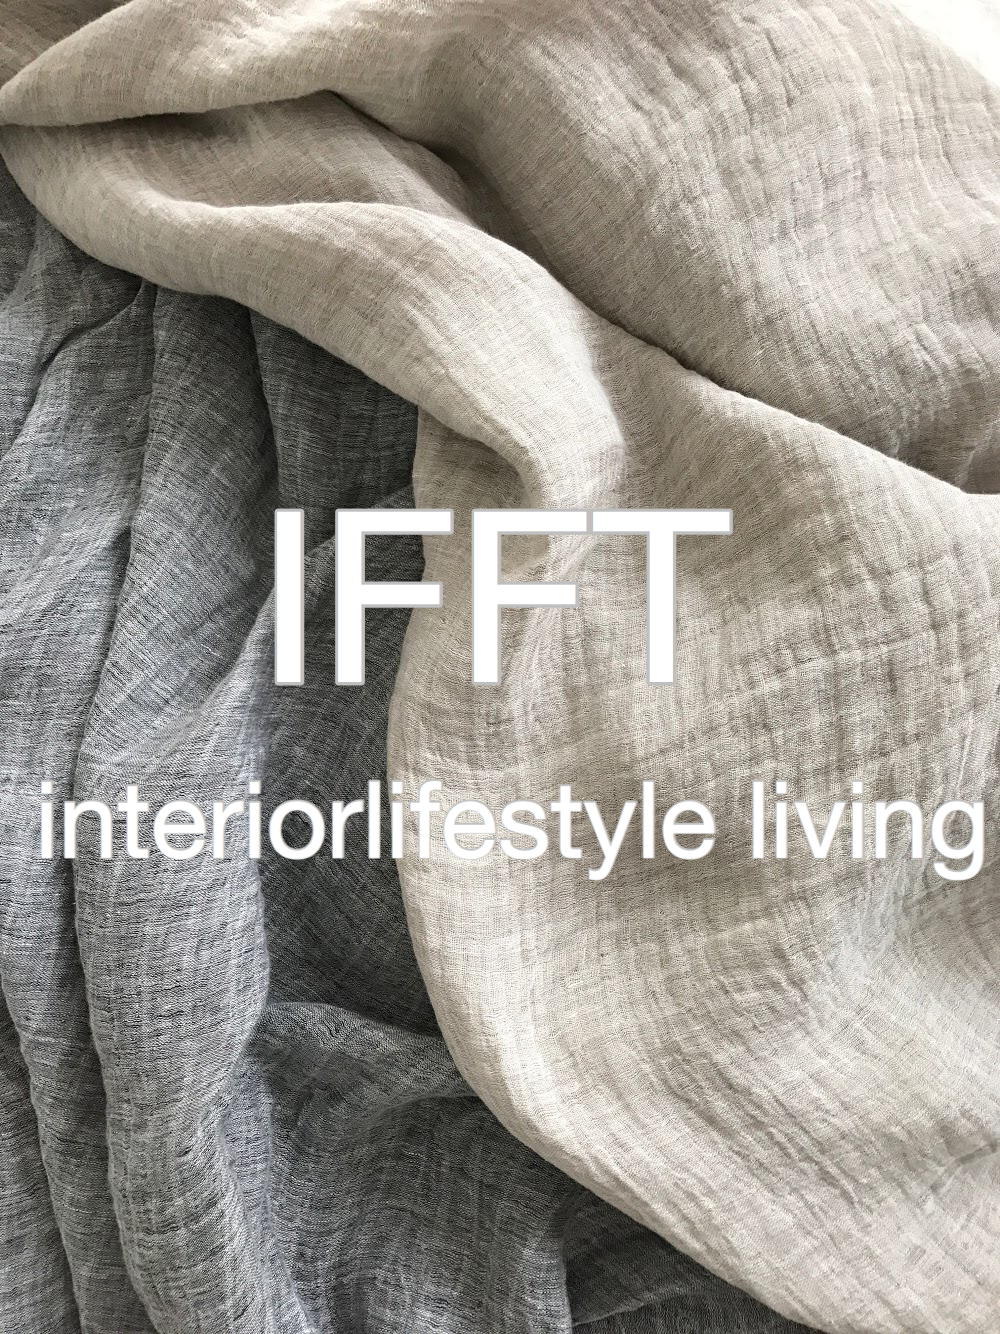 IFFT interiorlifestyle living 2019